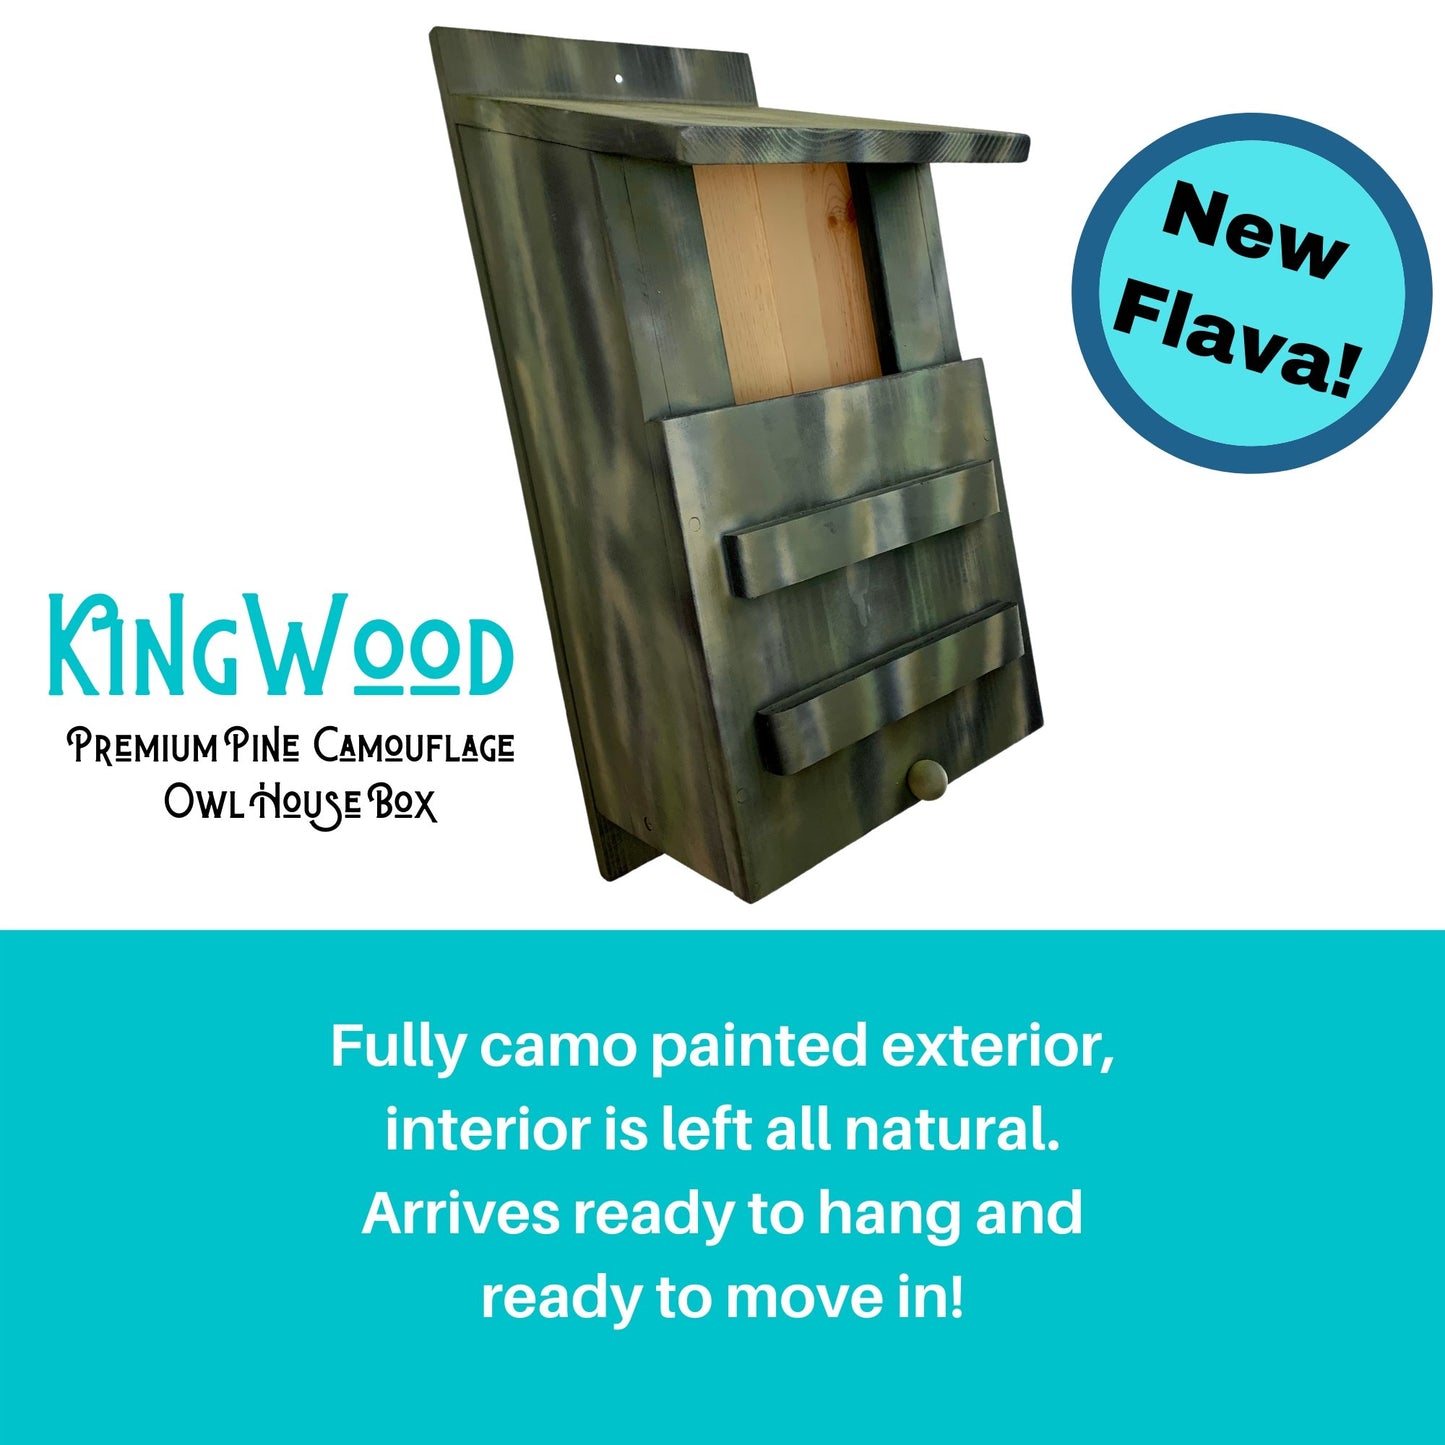 KingWood Premium Pine Camouflage Owl House Box